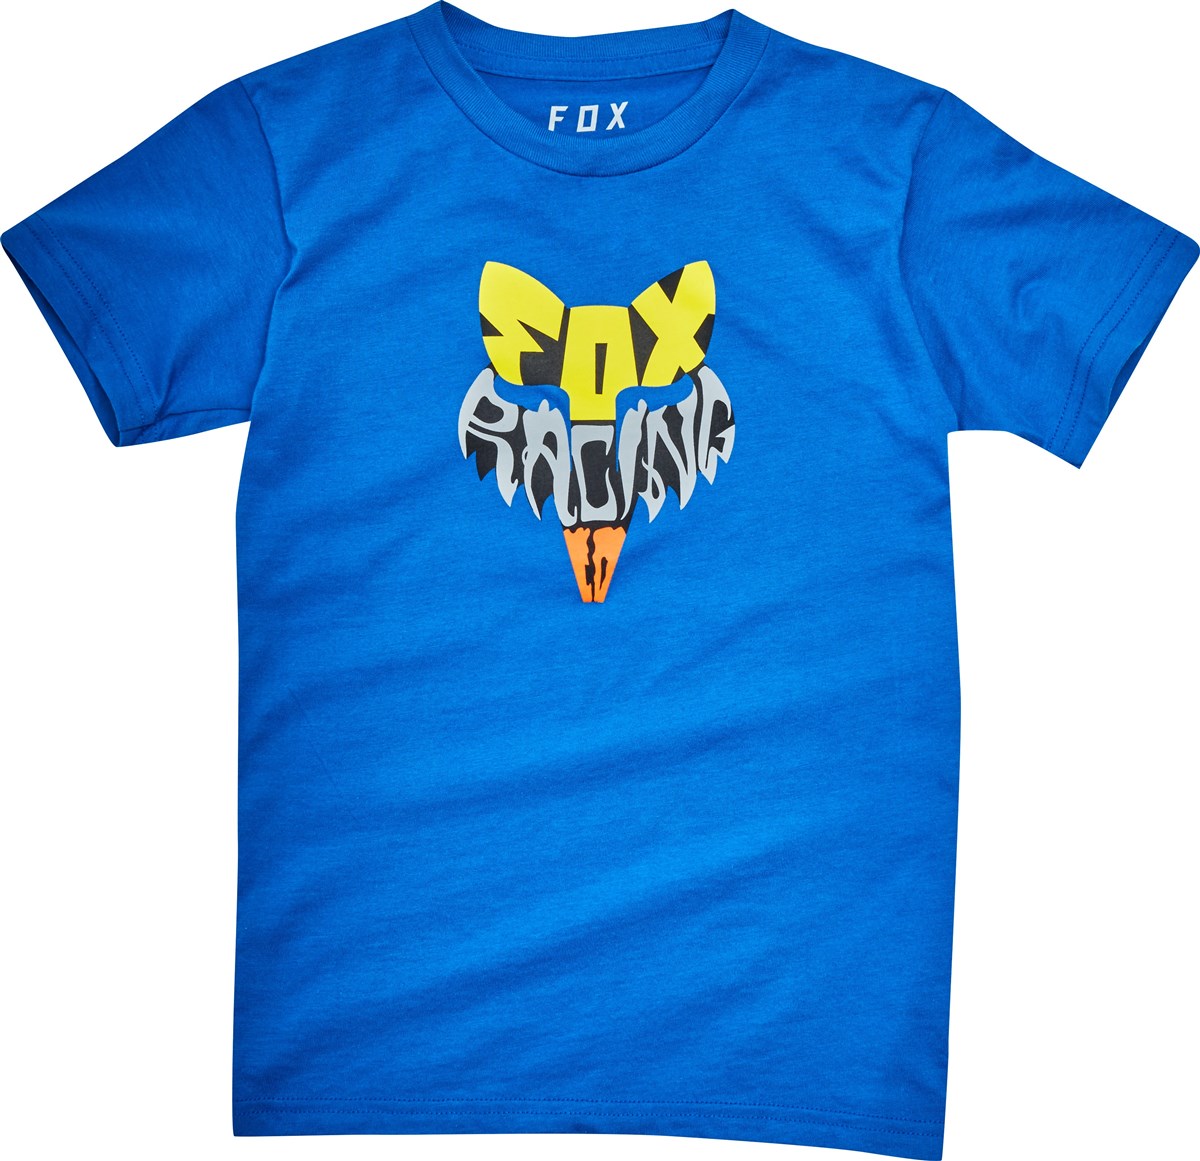 Fox Clothing Lyruh Kids Short Sleeve Tee AW17 product image